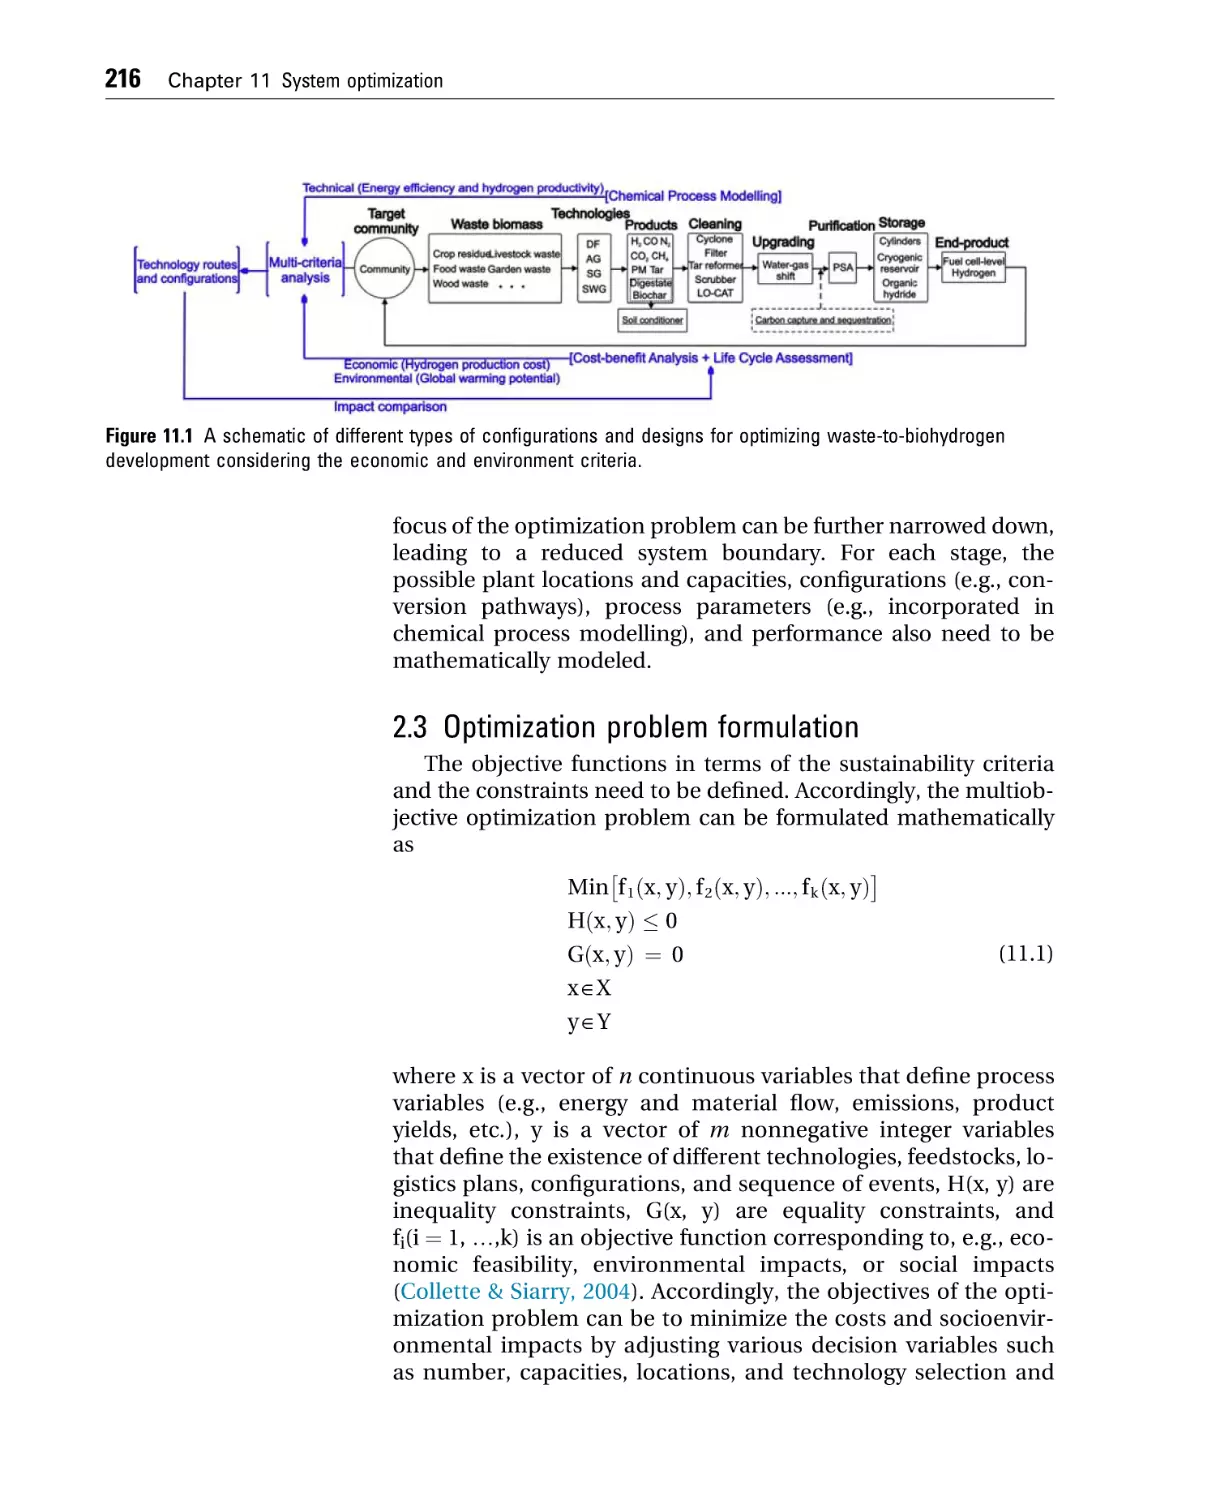 2.3 Optimization problem formulation